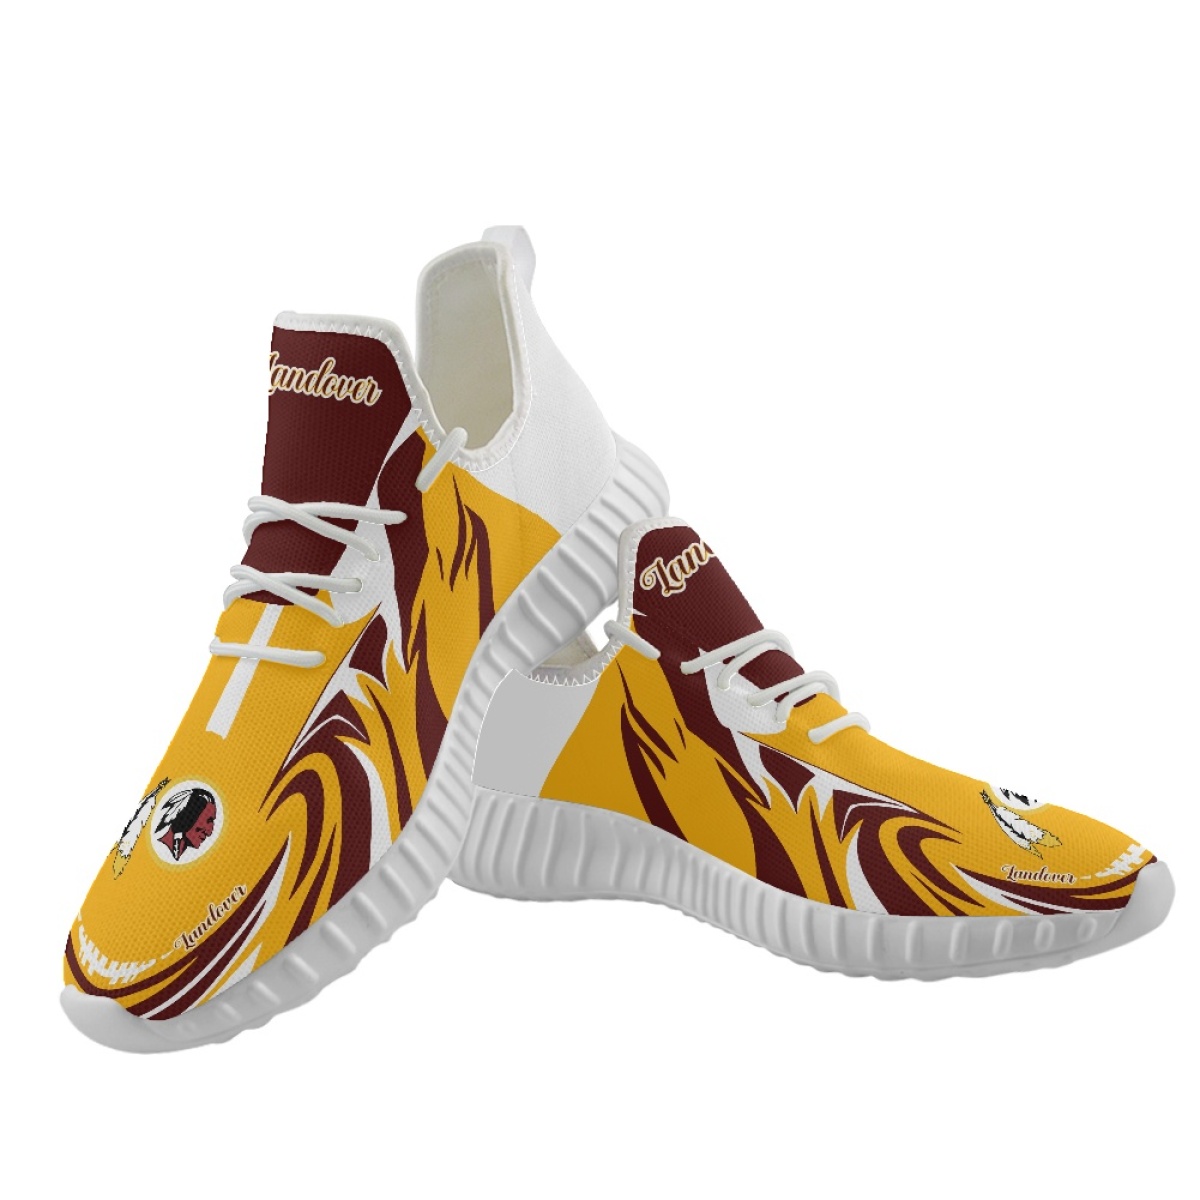 Men's Washington Redskins Mesh Knit Sneakers/Shoes 009